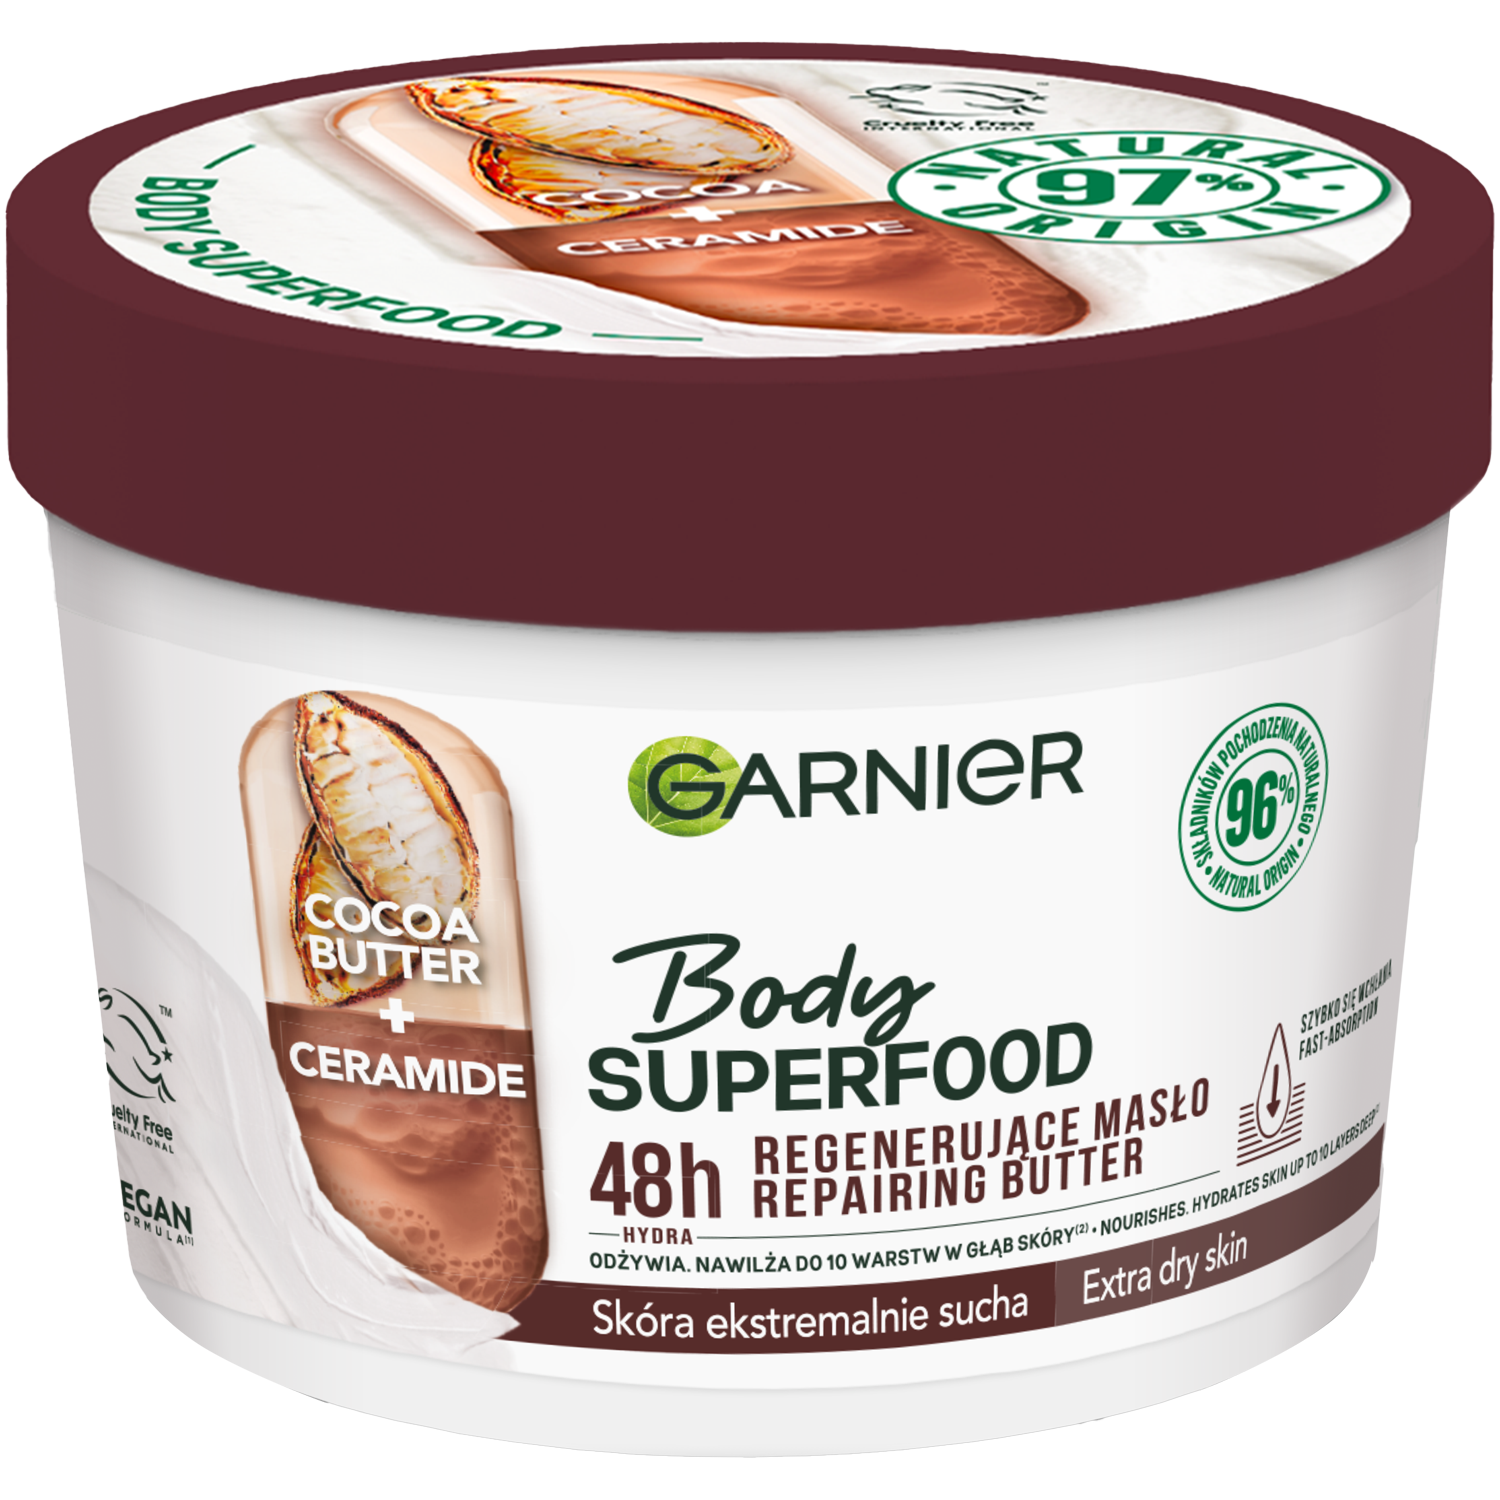 Garnier Body Superfood масло какао для тела, 380 мл